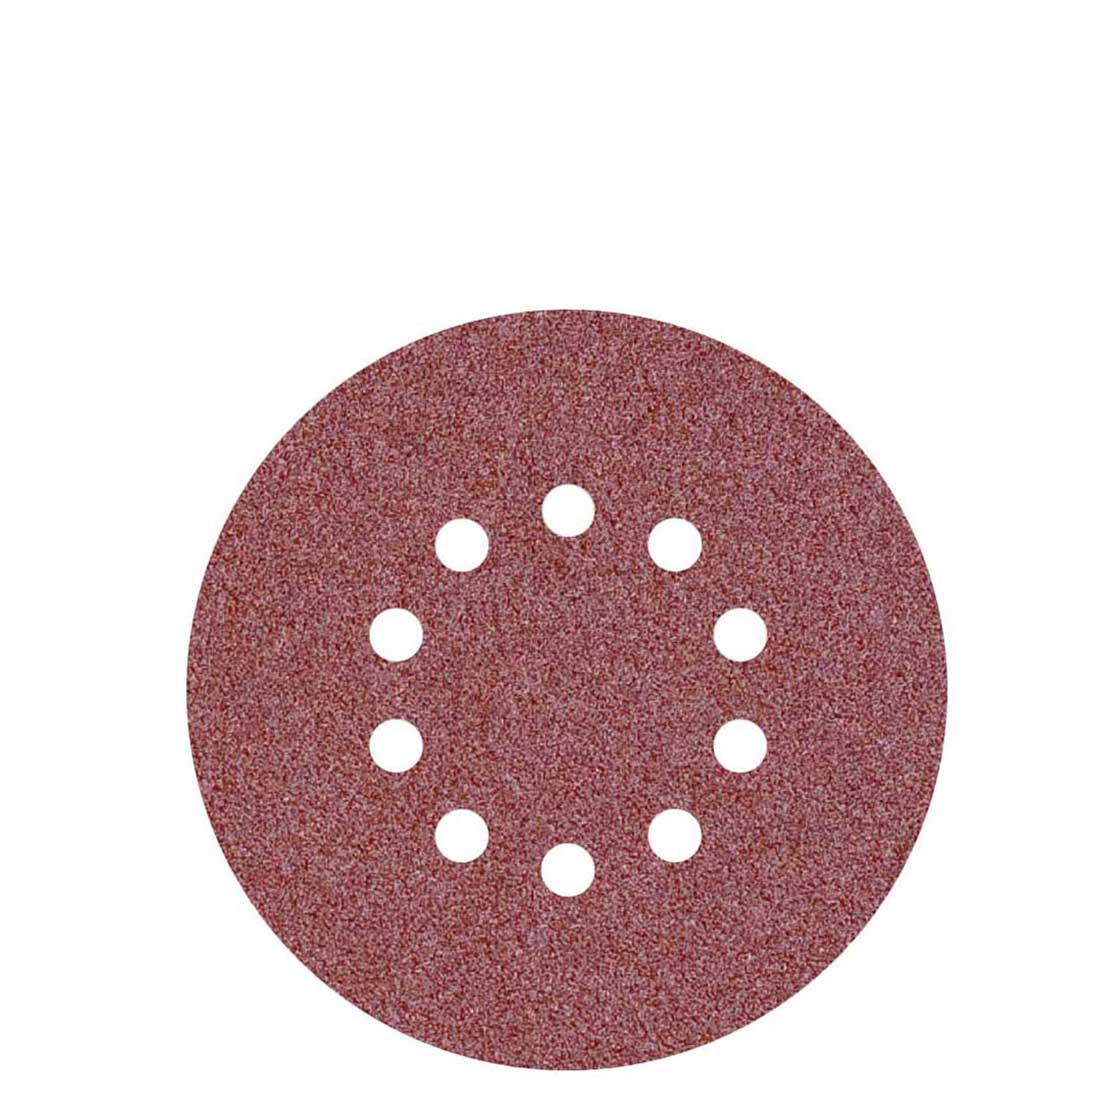 MioTools hook & loop sanding discs for drywall sanders, G16–240, Ø 225 mm / 10 hole / aluminium oxide